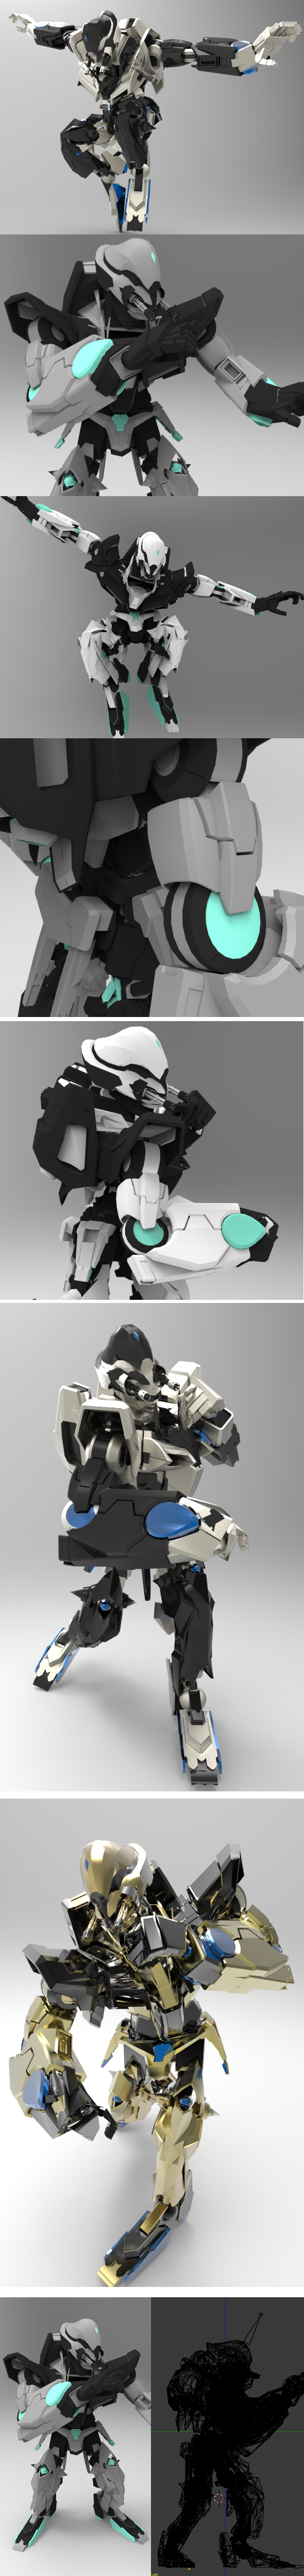 Sci-fi Humanoid Robot - 3Docean 21907790